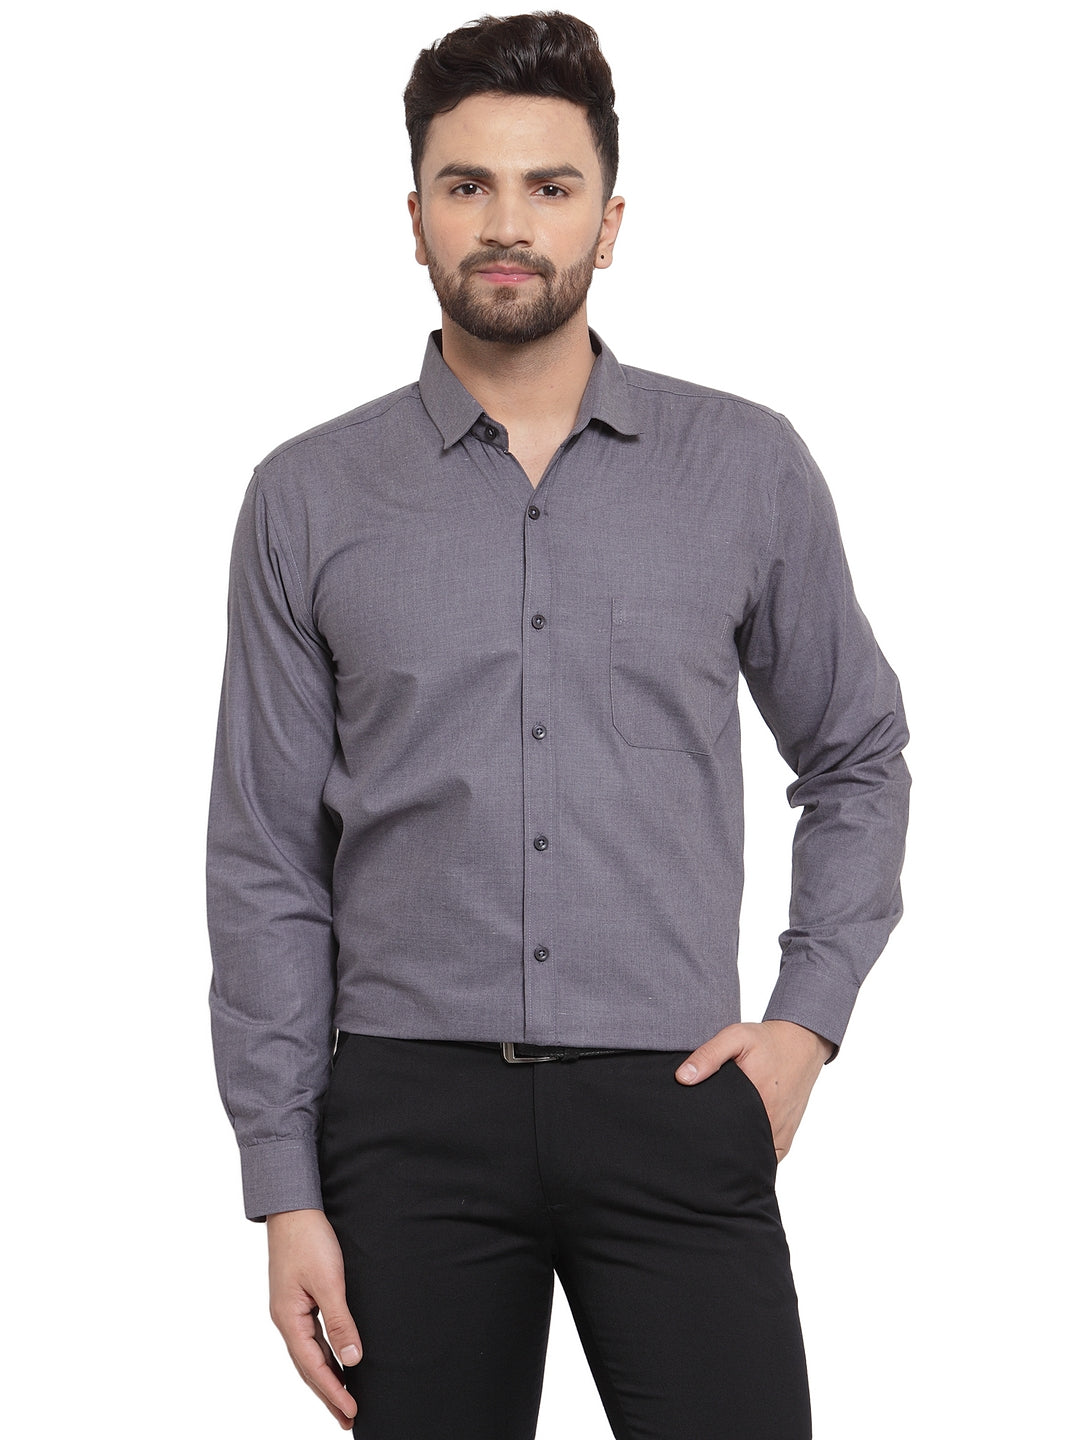 Jainish Men's Cotton Solid Charcoal Grey Formal Shirt's